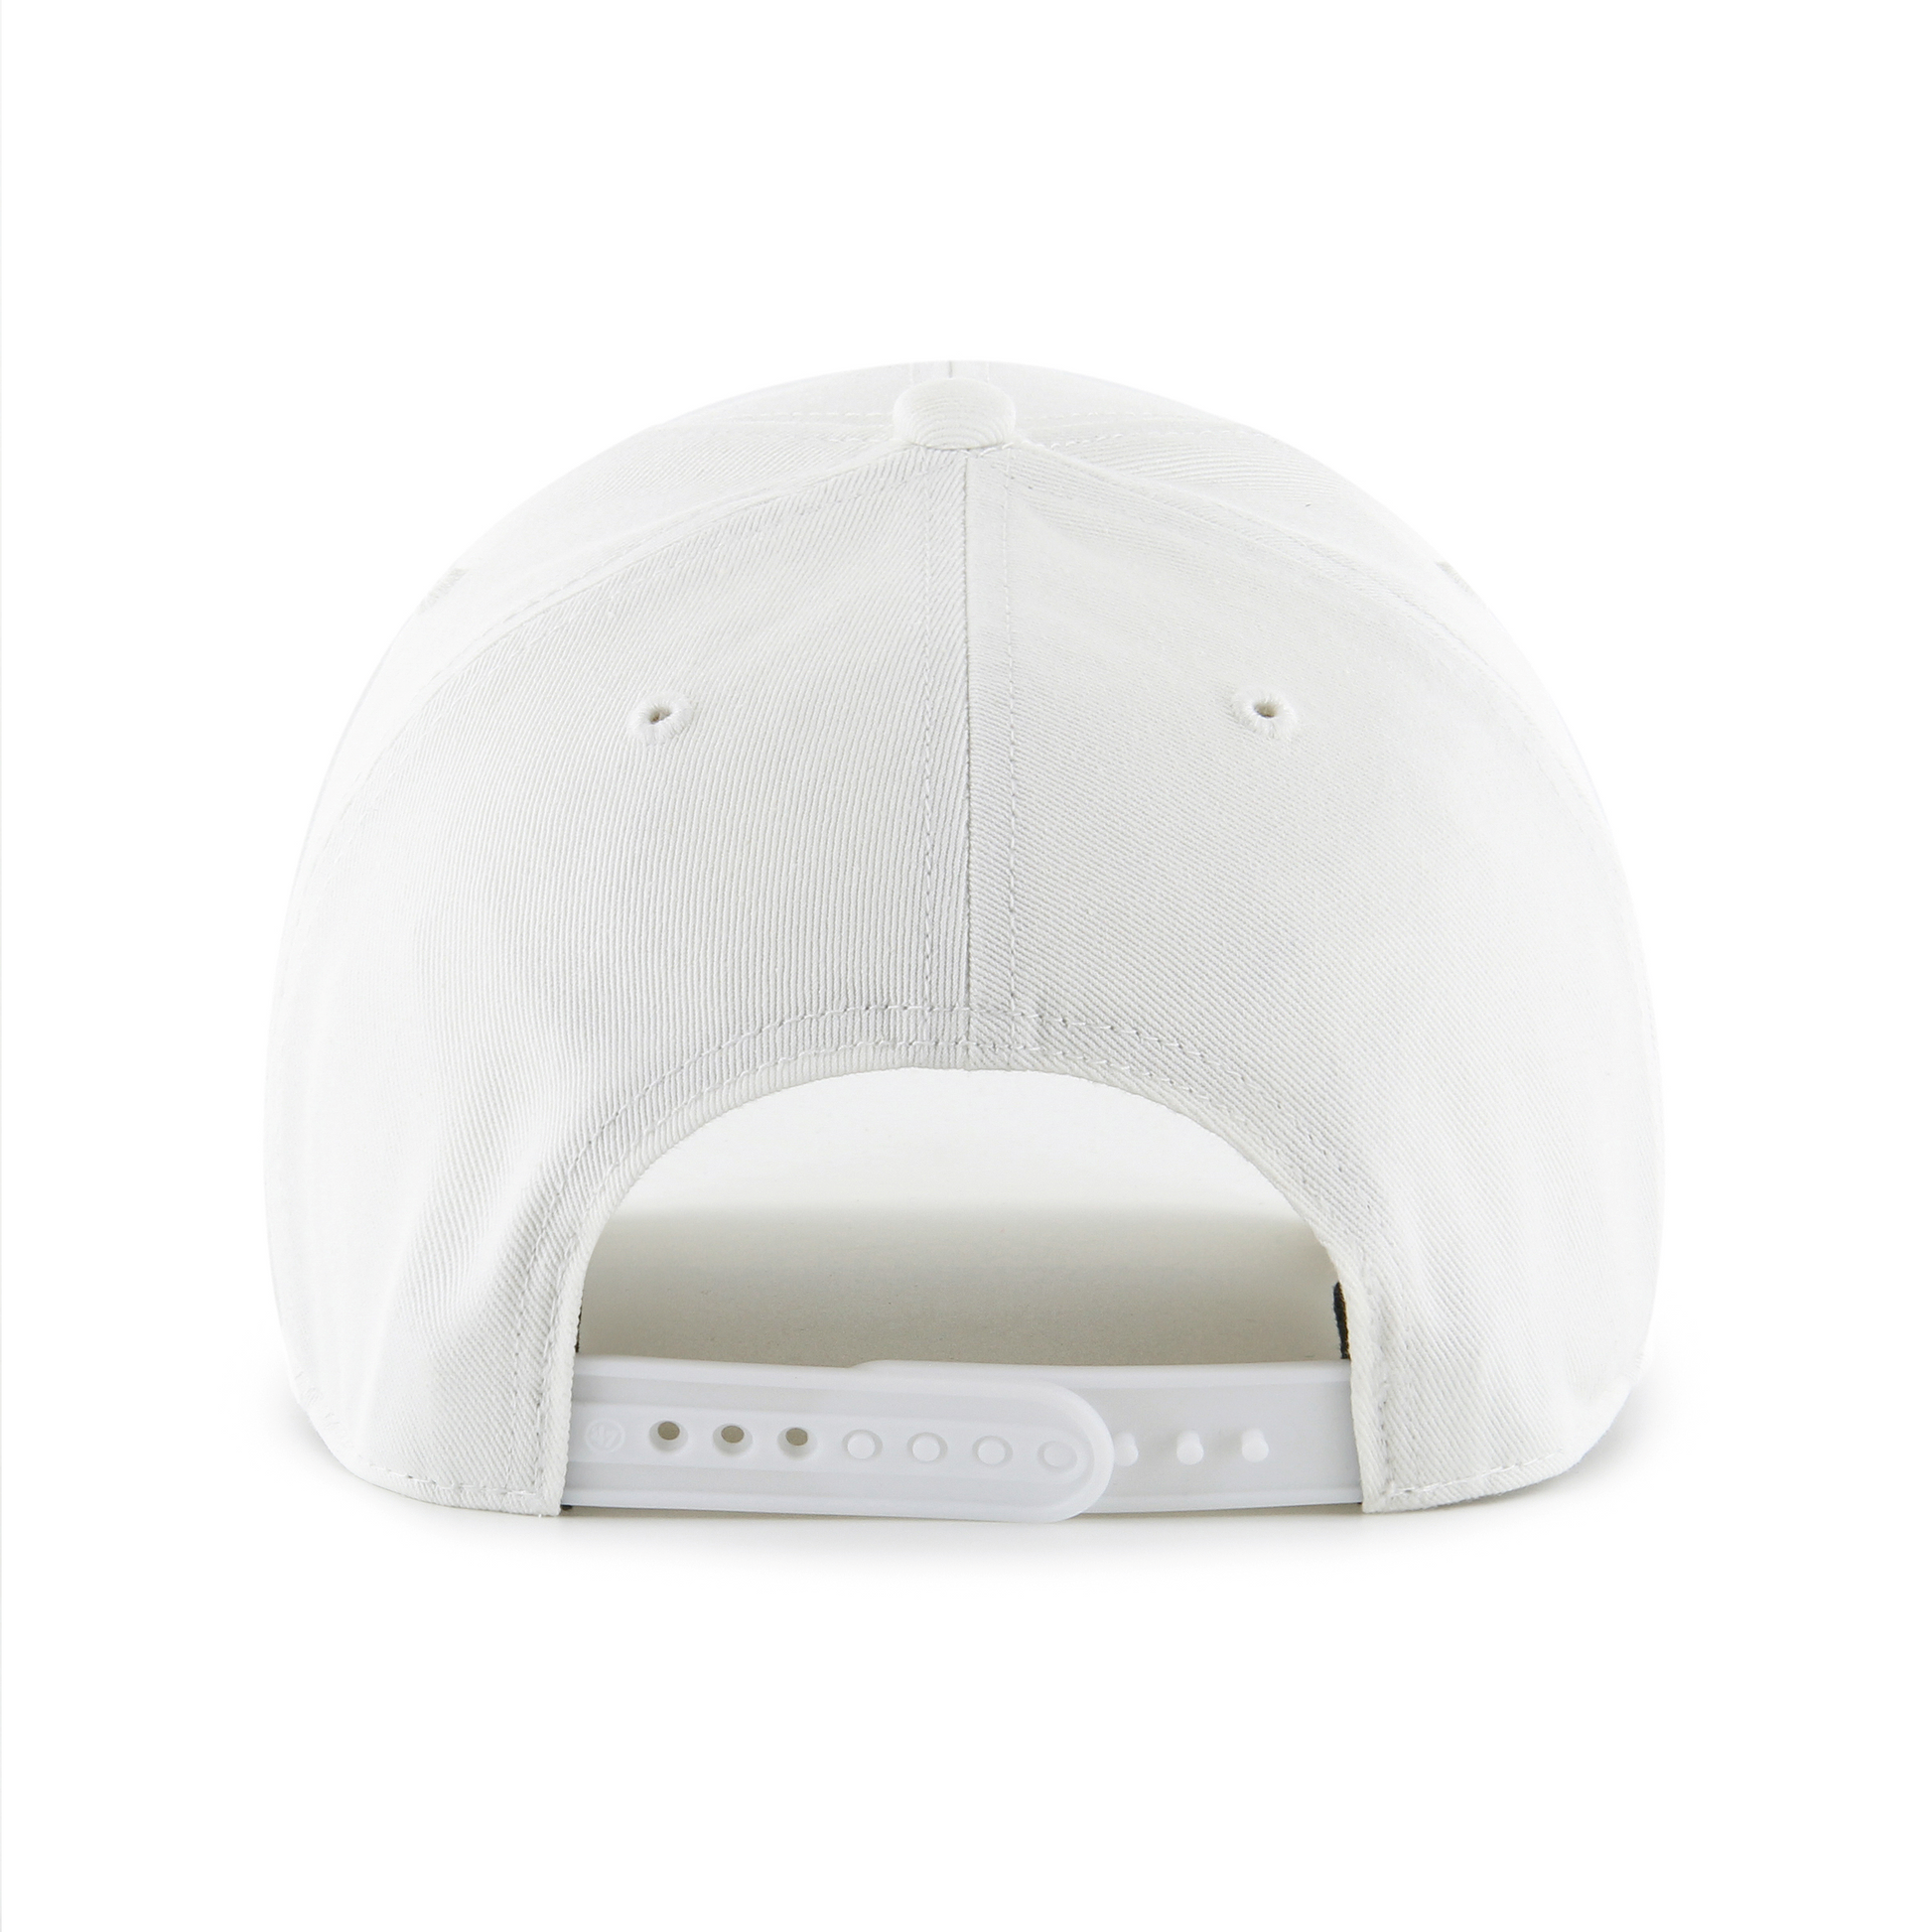 Back: White baseball cap with white snaps